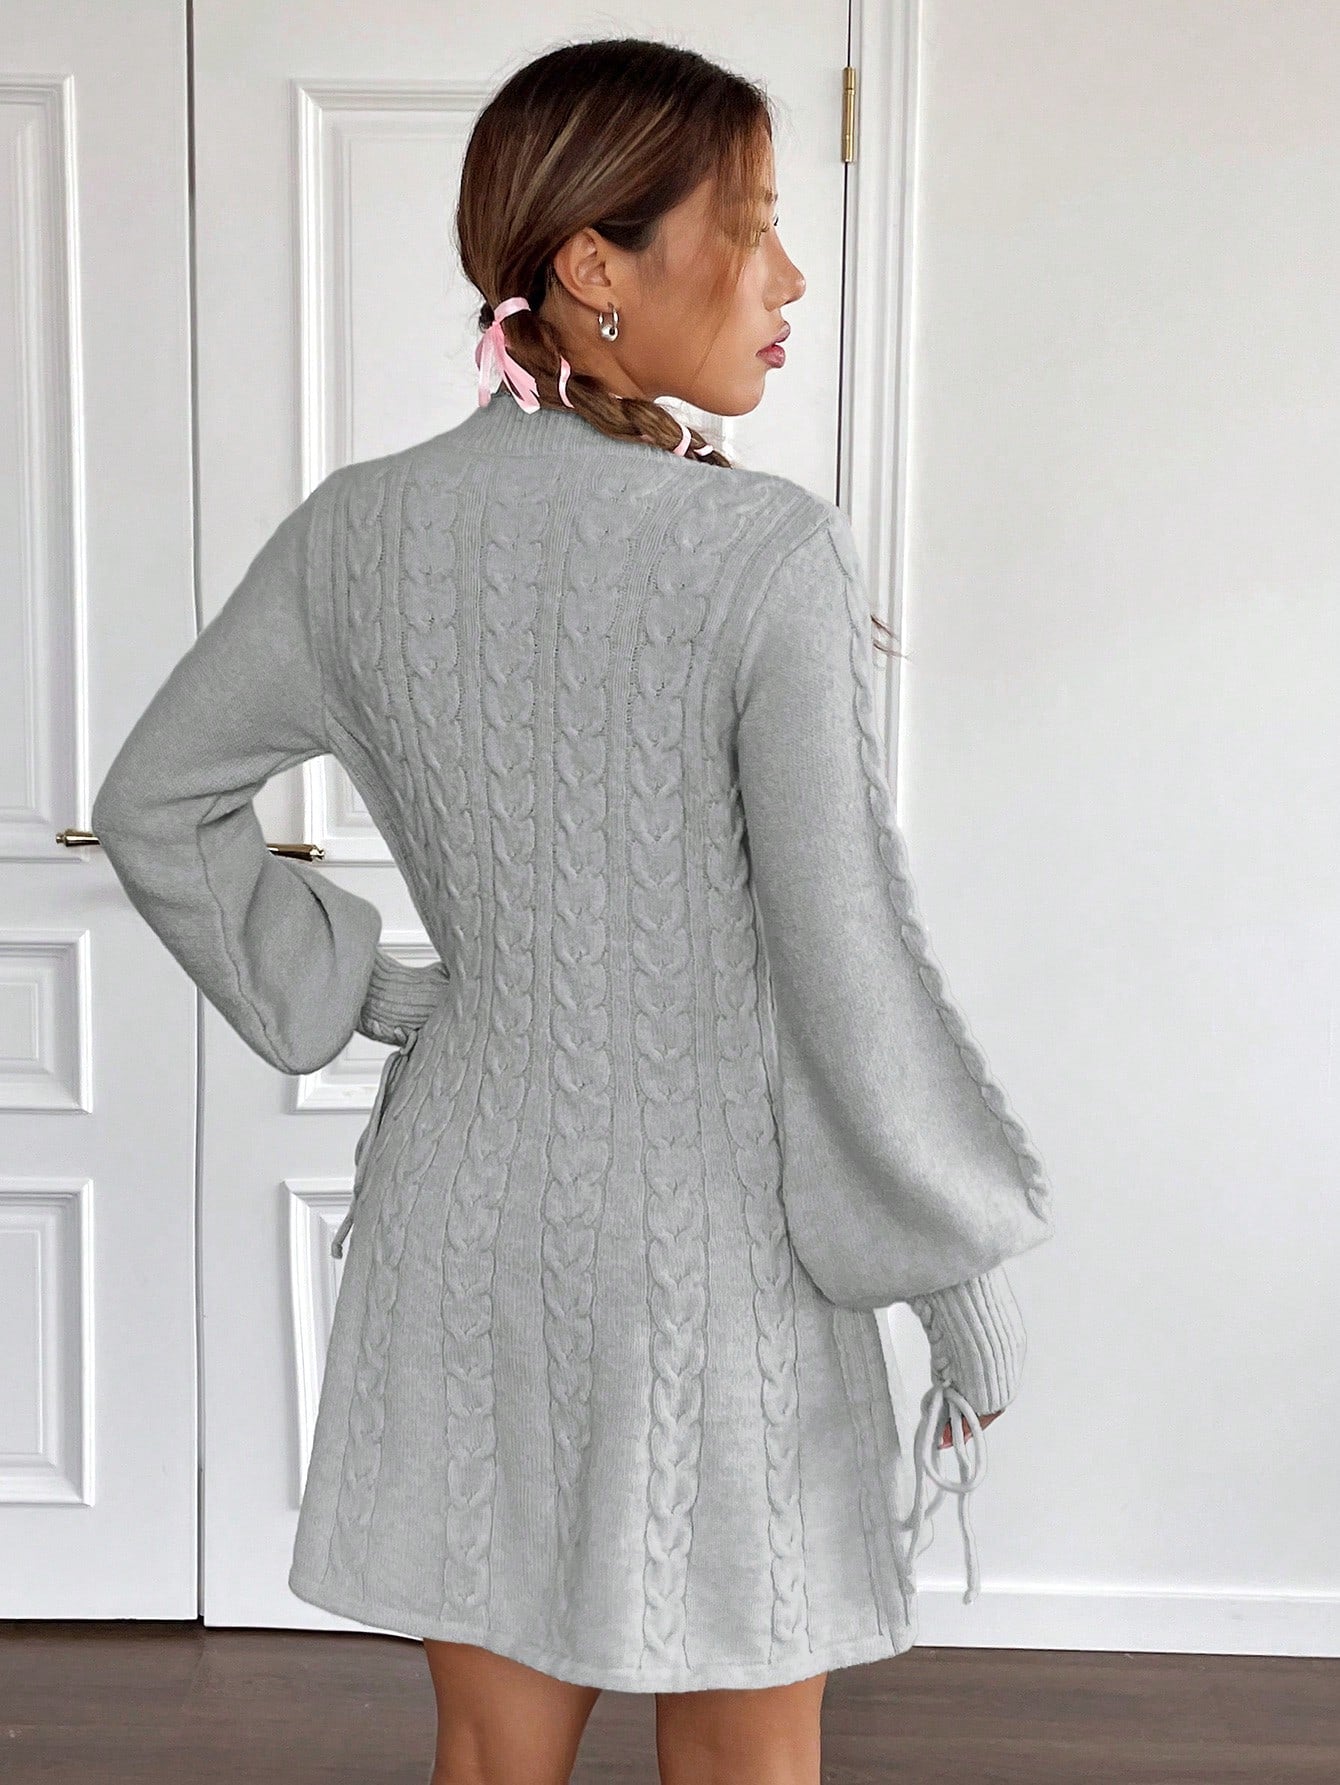 Qutie Women's V-neck Lantern Sleeve Sweater Dress